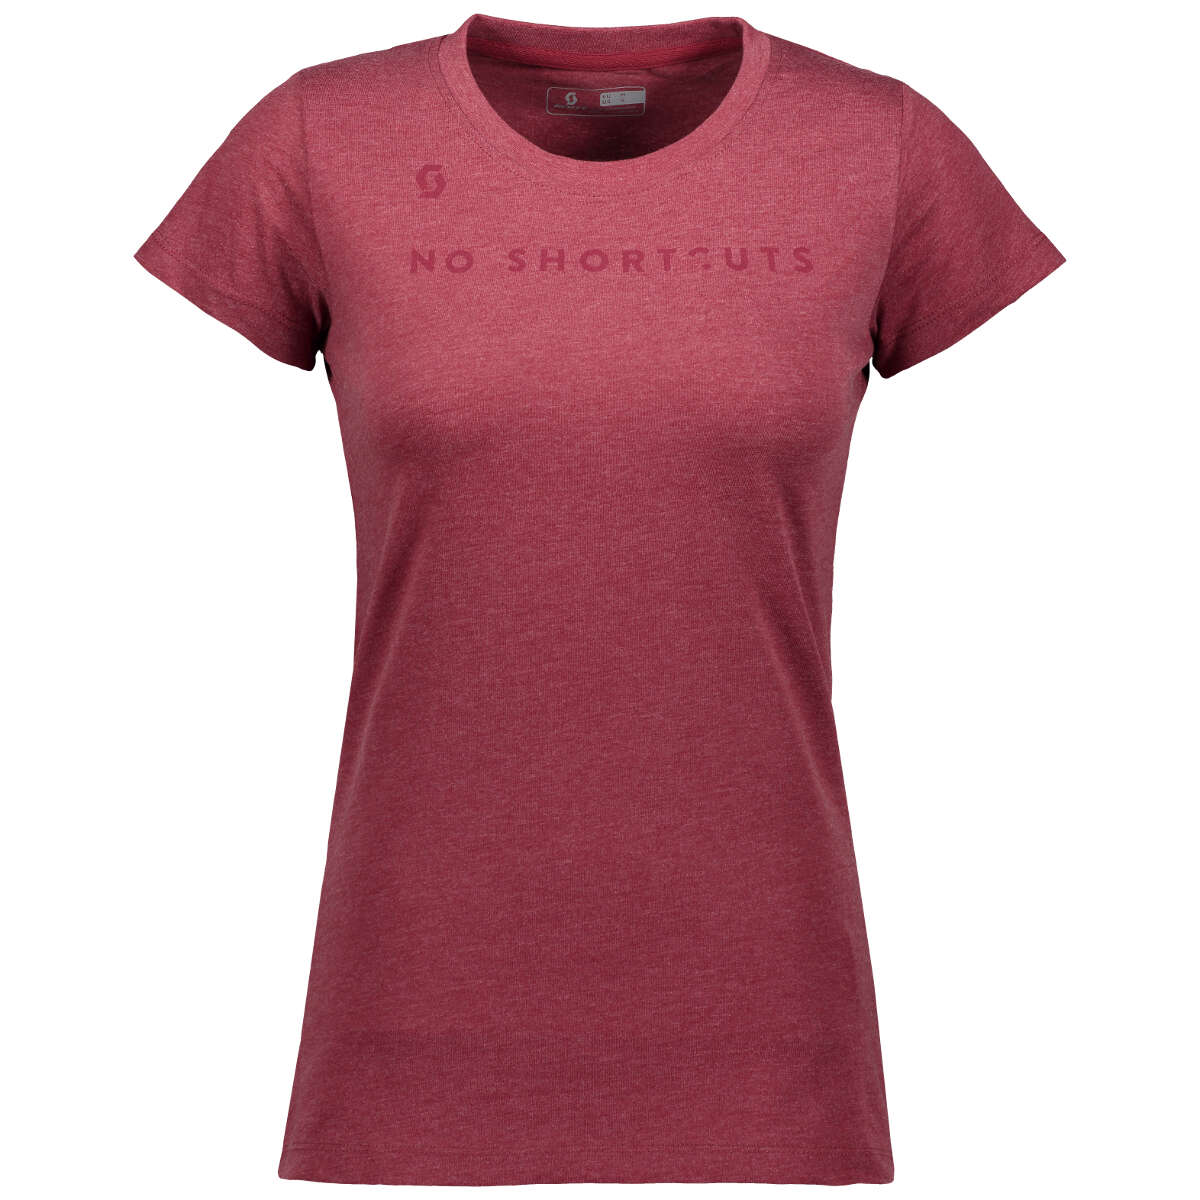 Scott Donna T-Shirt 10 No Shortcuts Tibetan Heather Red